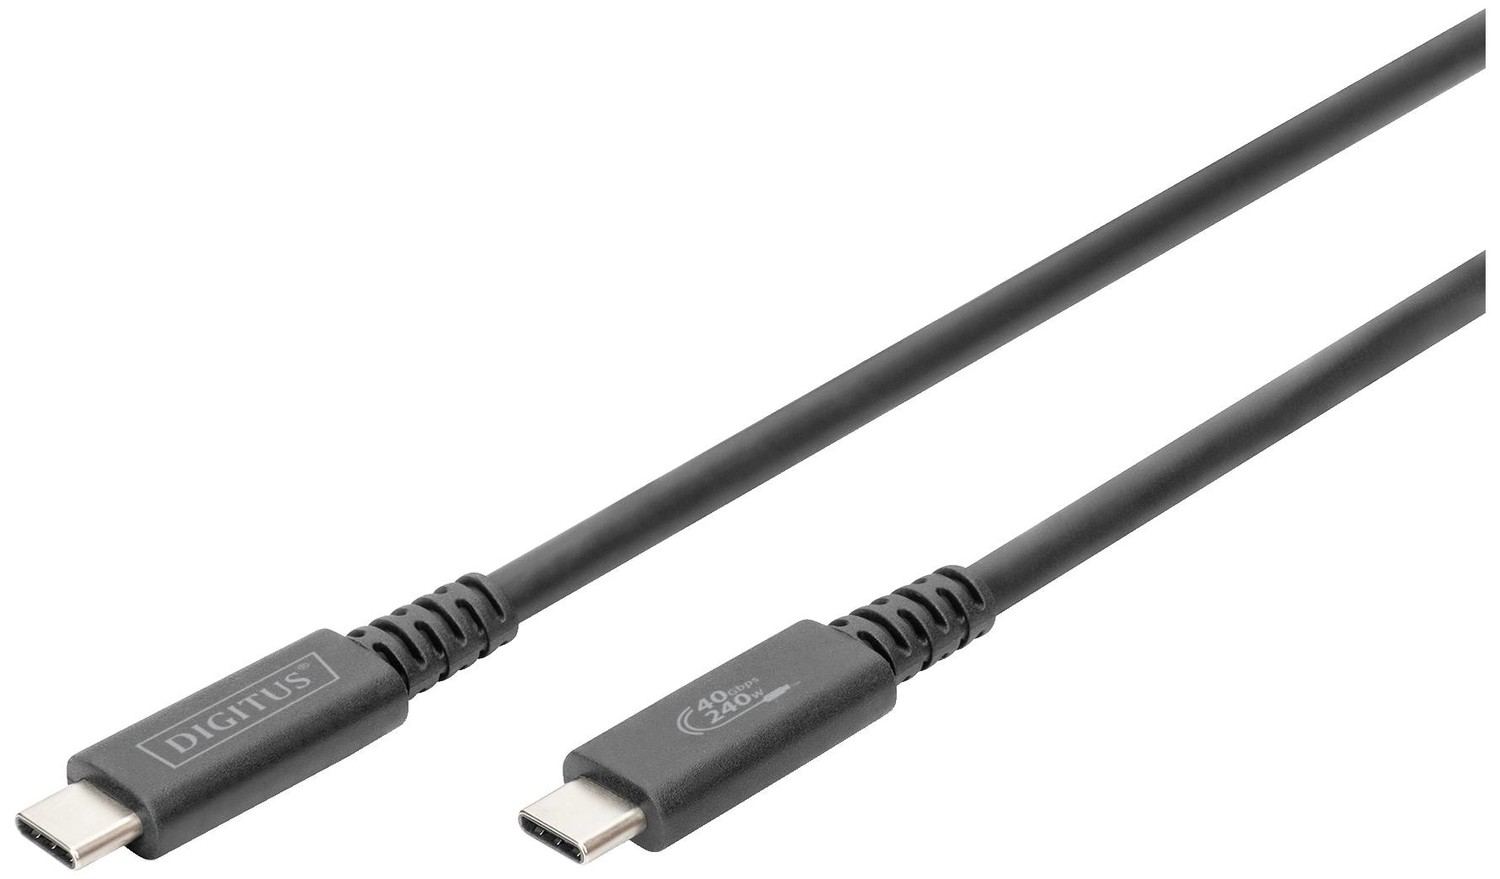 Digitus USB kabel USB 3.2 Gen2 (USB 3.1 Gen2), USB 3.2 Gen2x2, USB 3.2 Gen1 (USB 3.0 / USB 3.1 Gen1) USB-C®, USB-C ® zástrčka 0.8 m černá flexibilní provedení,